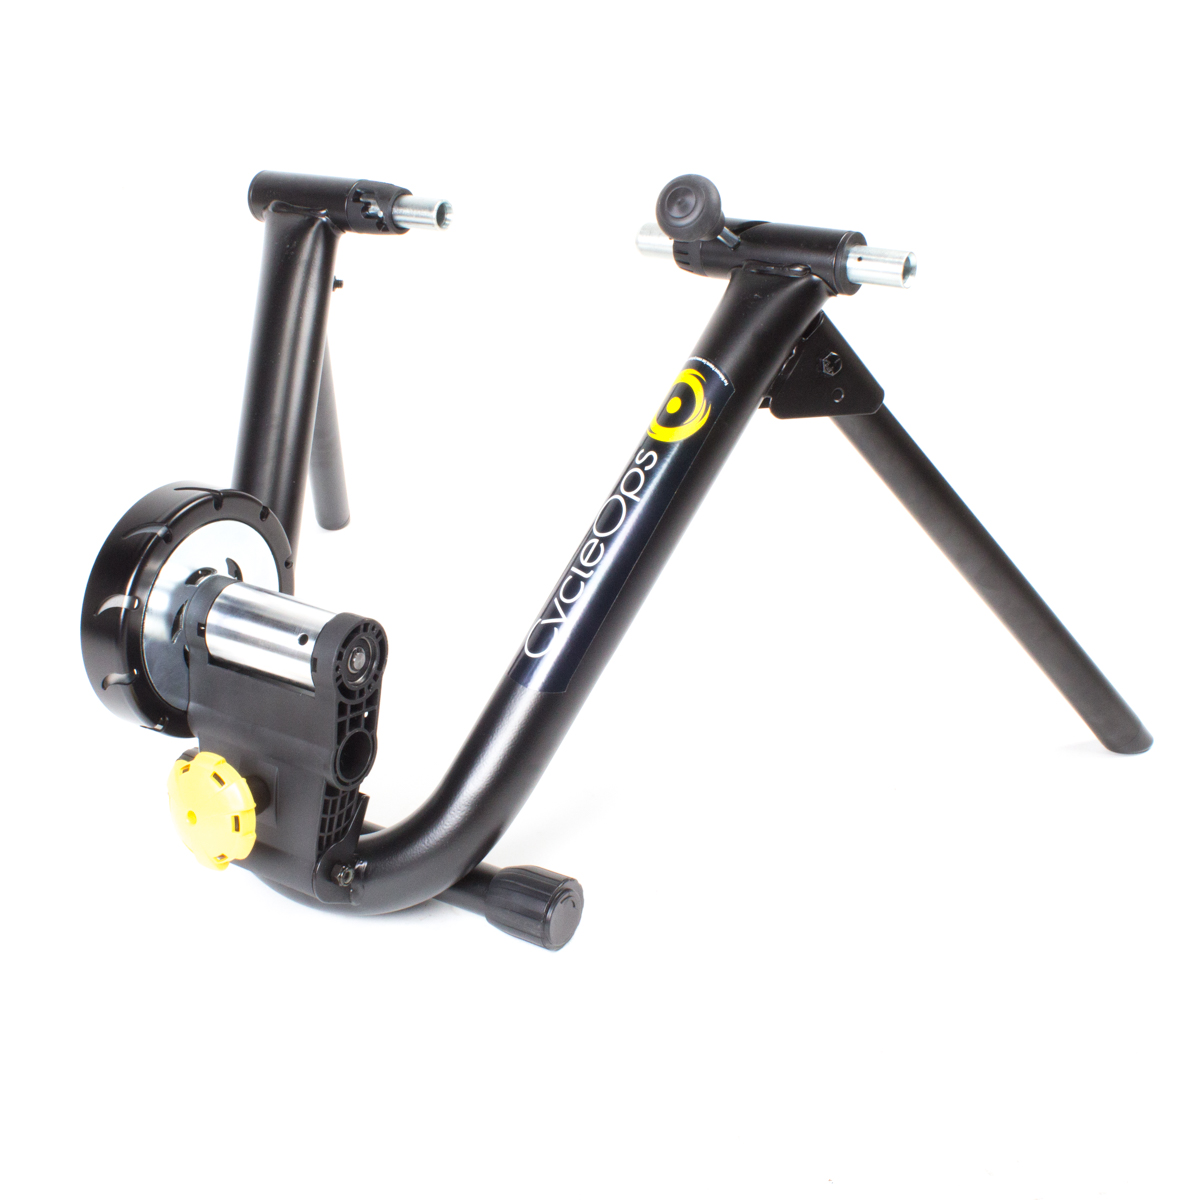 Spinning bike trainer - dareloprogram